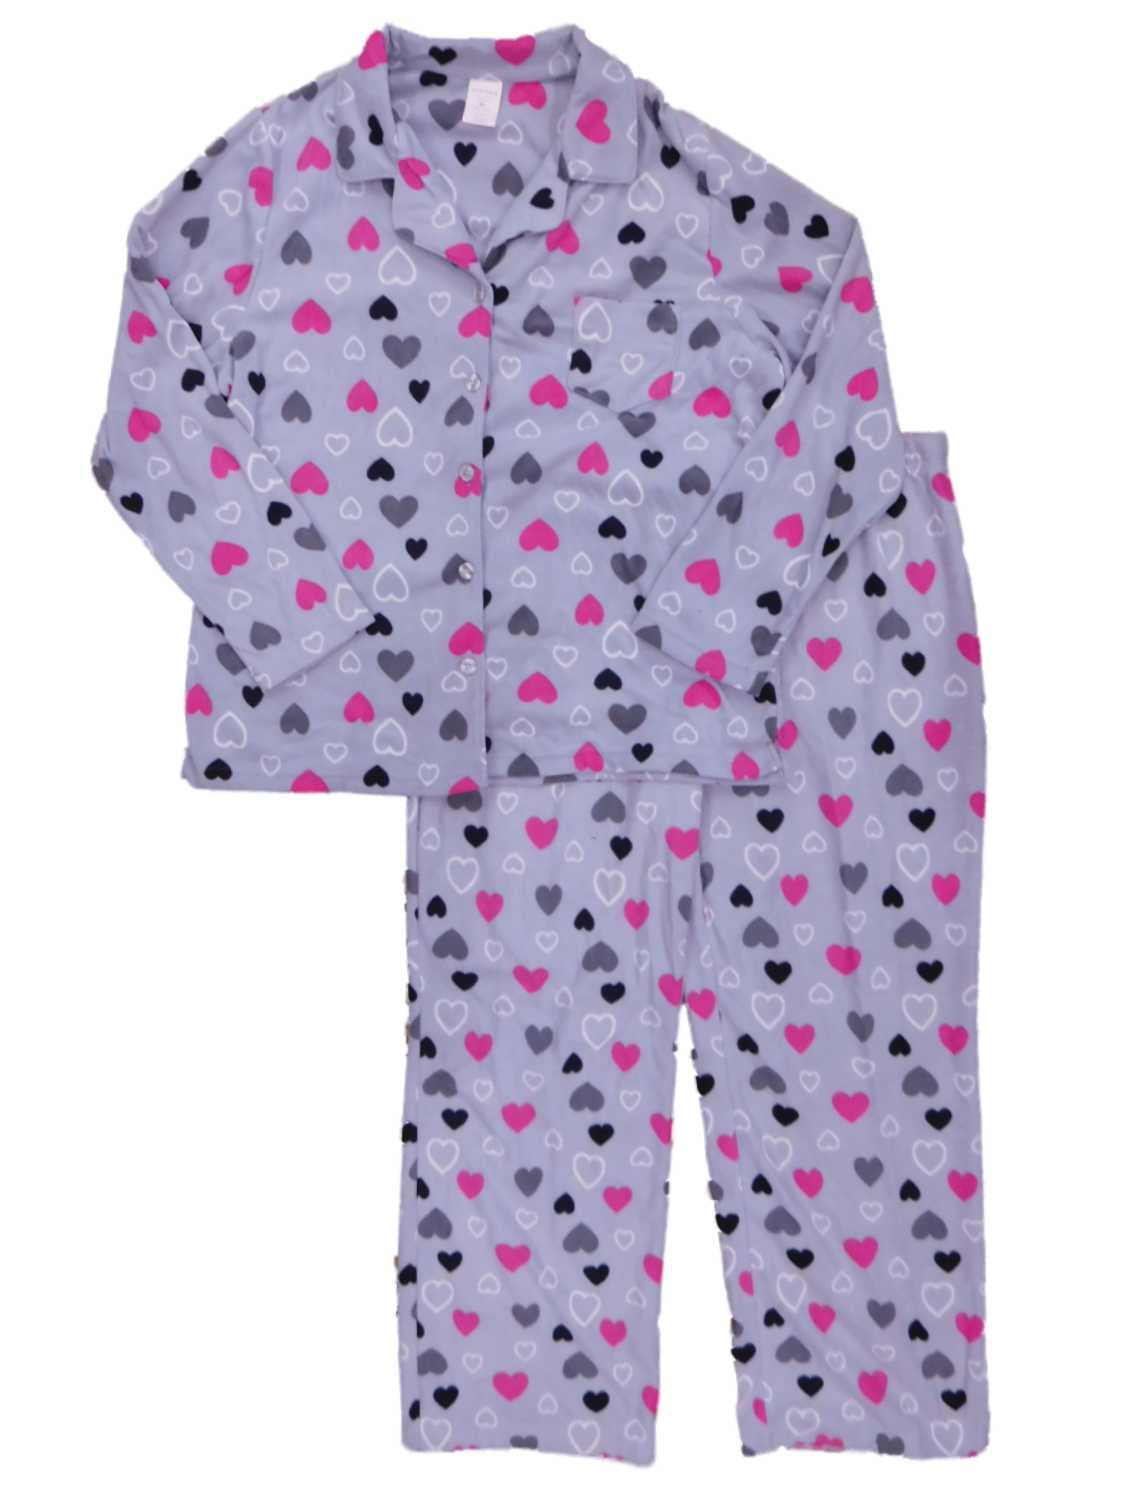 Womens Pajama Fleece PJ Top Long Sleeve Sleep Shirt Zebra Stripe GrayPink Medium 